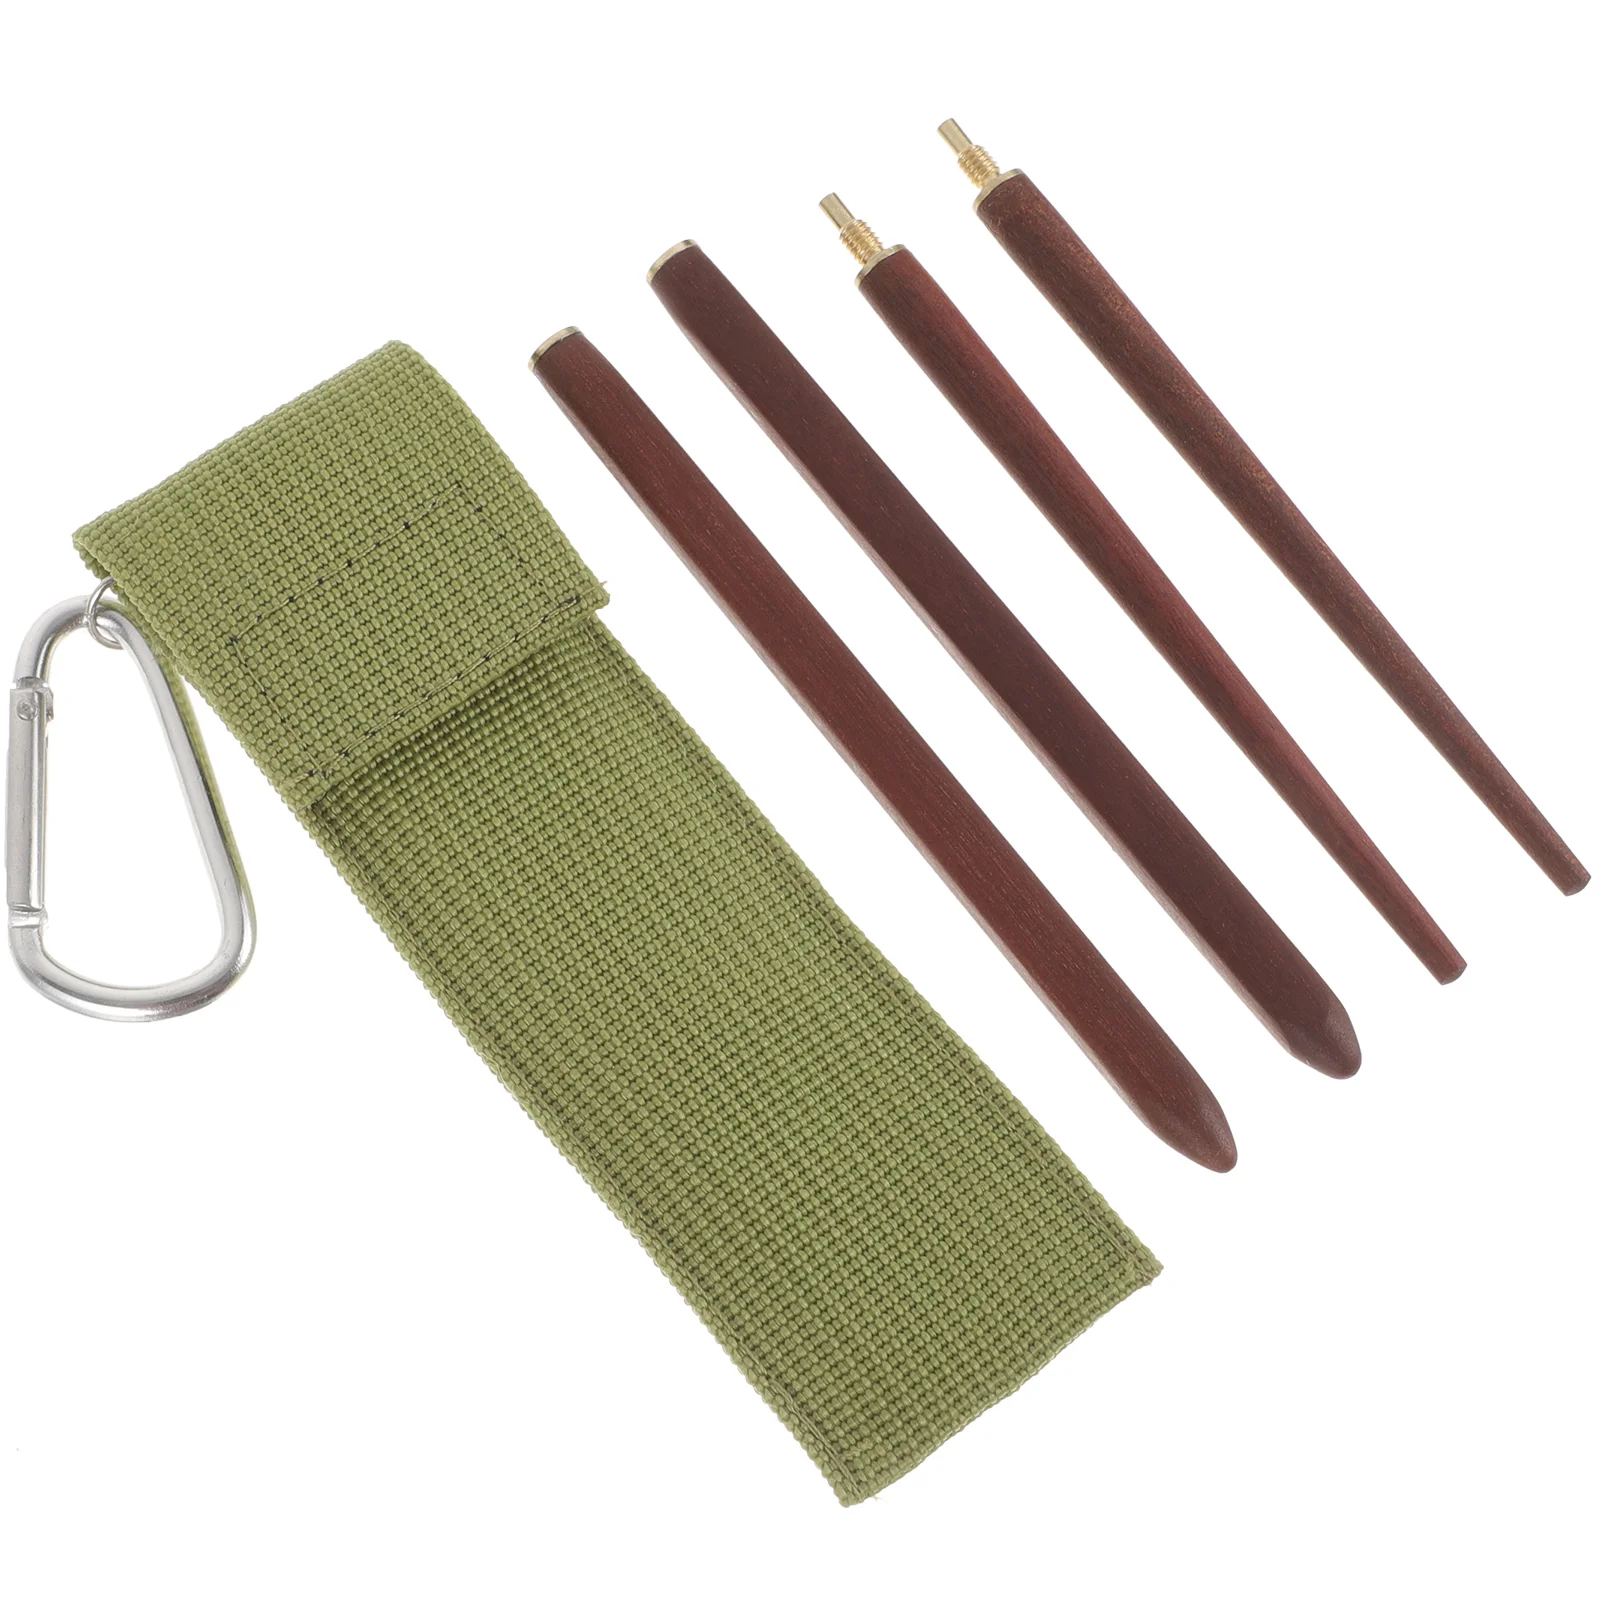 

Folding Chopsticks Delicate Ramen Household Food Flatware Finger for Chips Cool Multi-function Dinner Log Camping